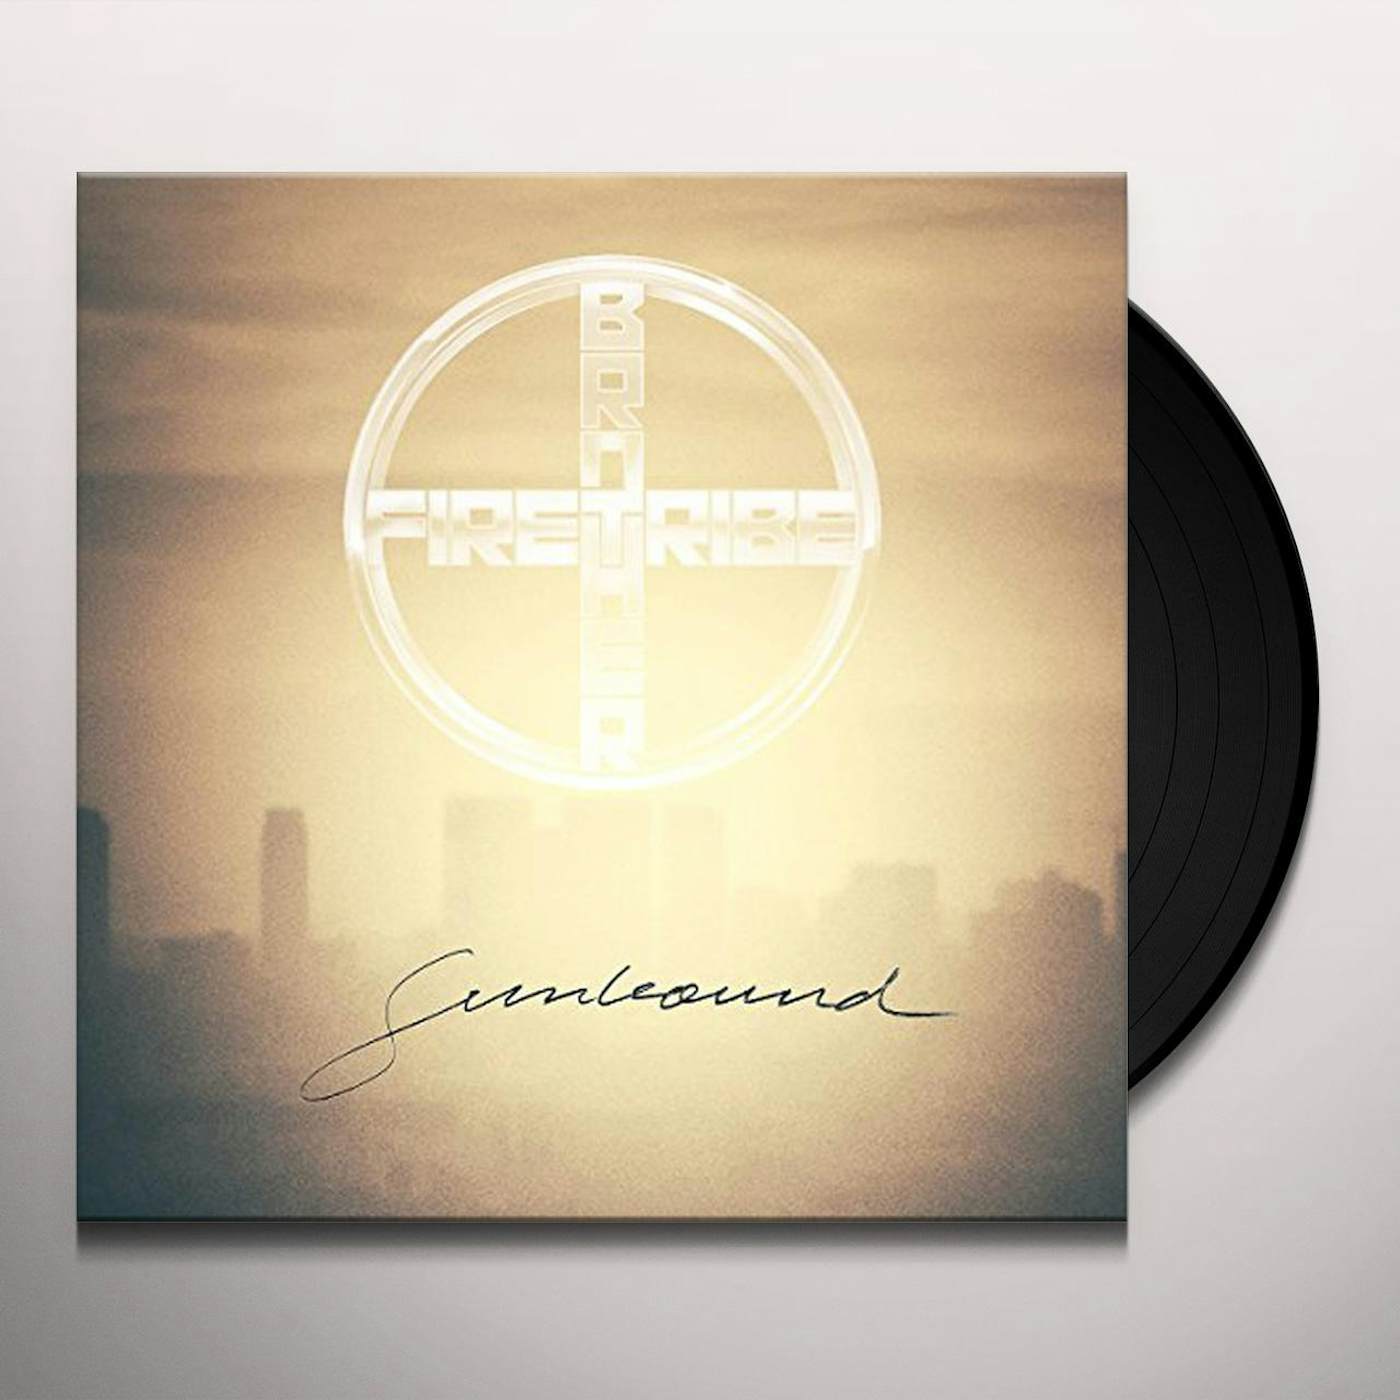 Brother Firetribe Sunbound Vinyl Record